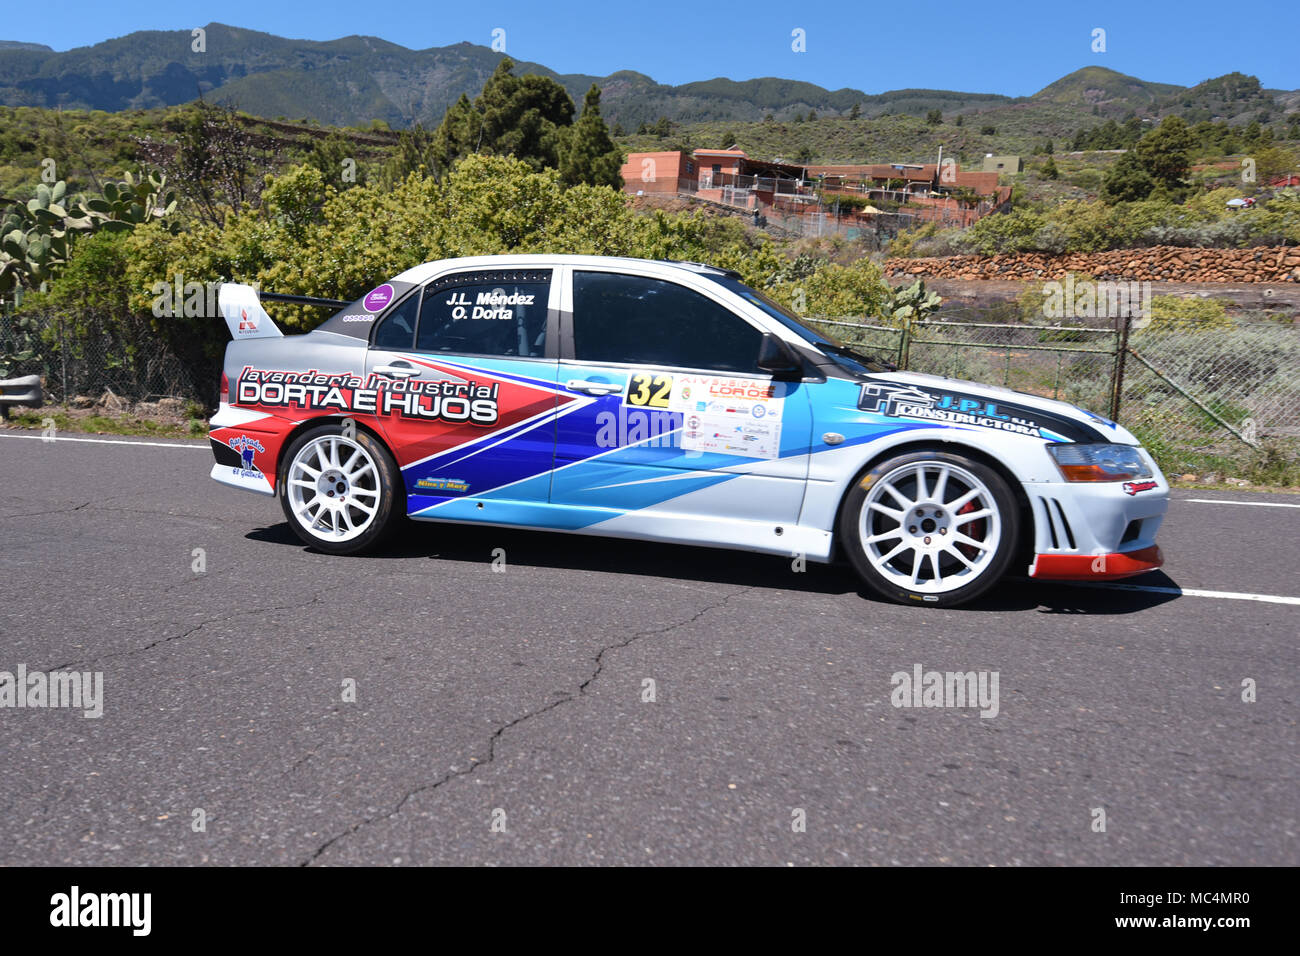 Tenerife, Espagne - Mars 24, 2018 : Mitsubishi Evo dans un Crecer los loros rally race à Tenerife, îles Canaries, Espagne. Banque D'Images